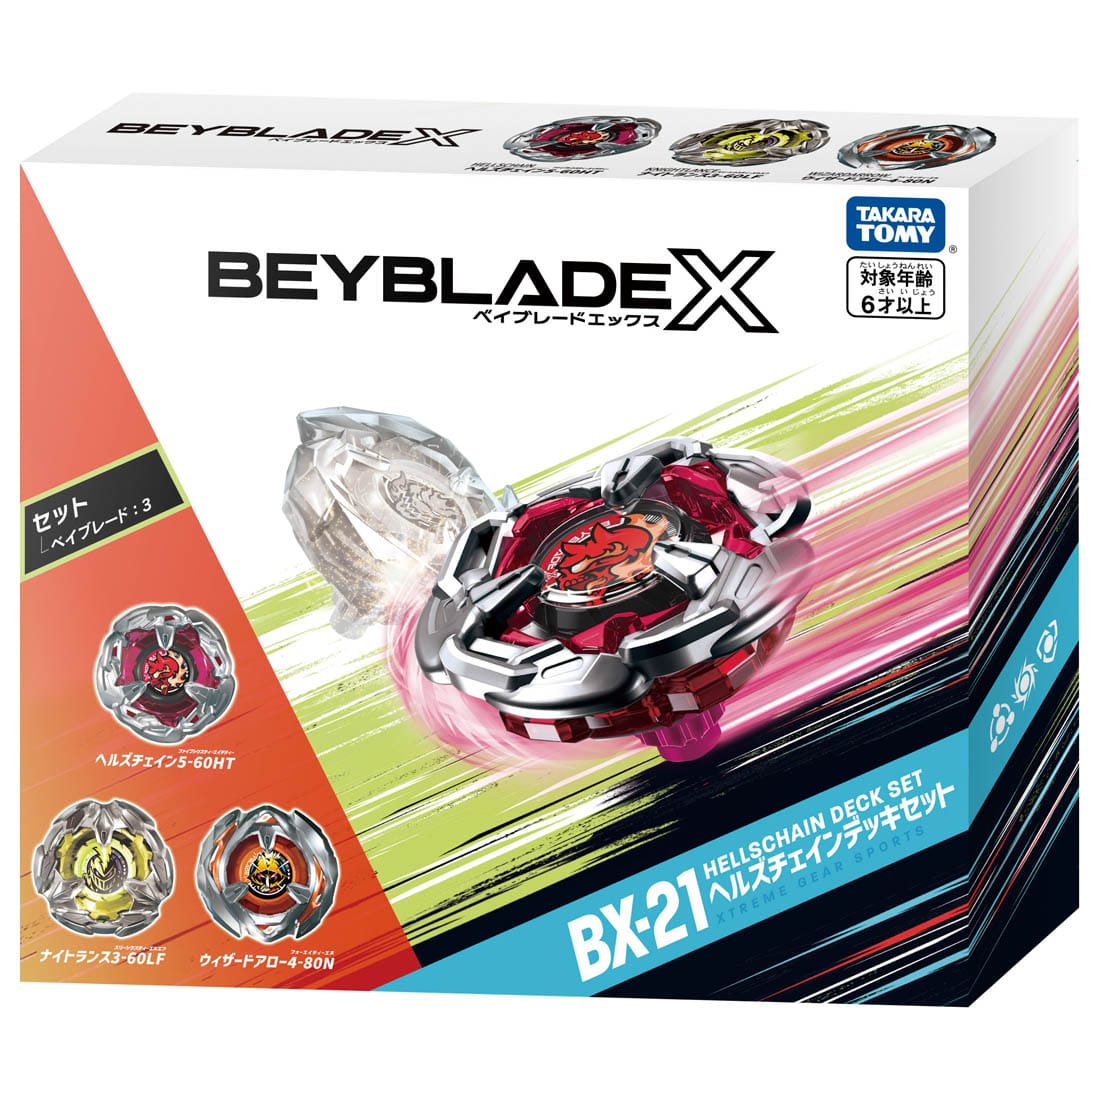 BEYBLADE X『BX-21 ヘルズチェインデッキセット』ベイブレード-002